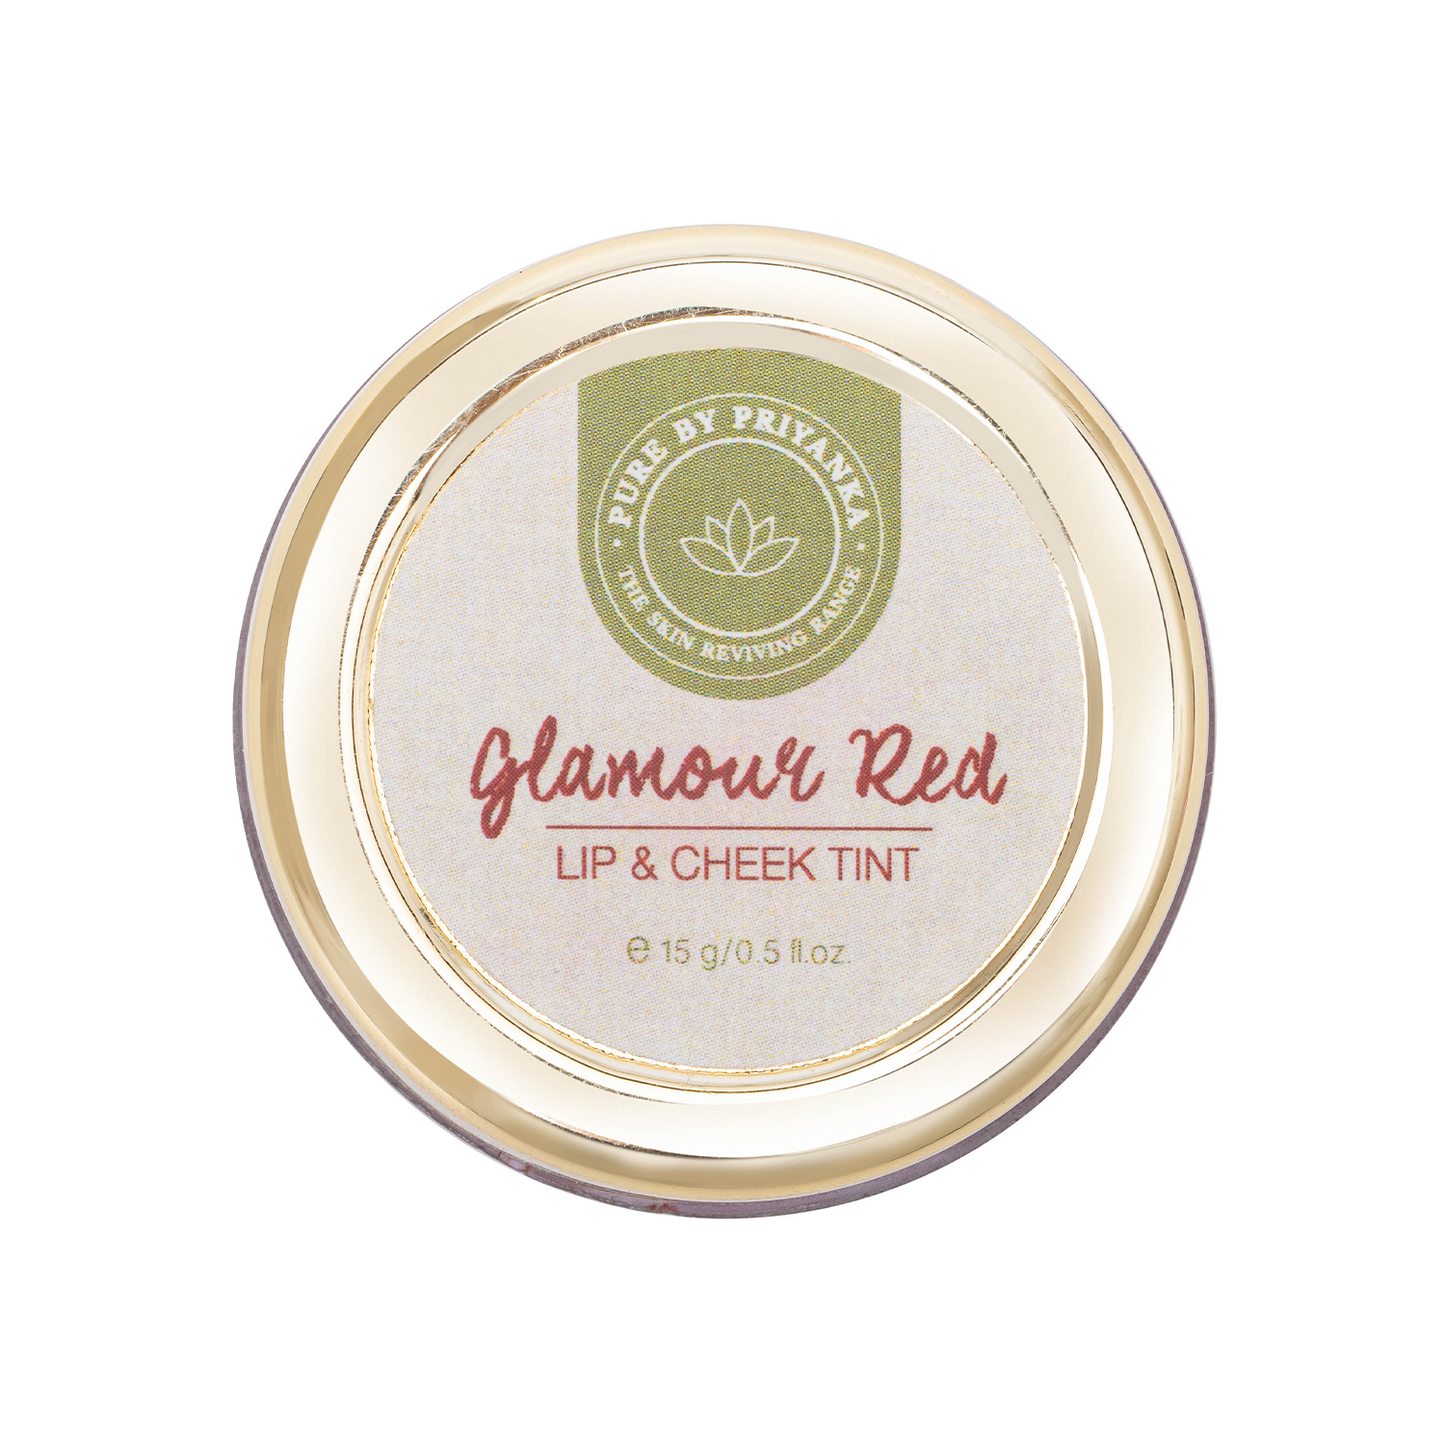 Glamour Red Lip & Cheek Tint